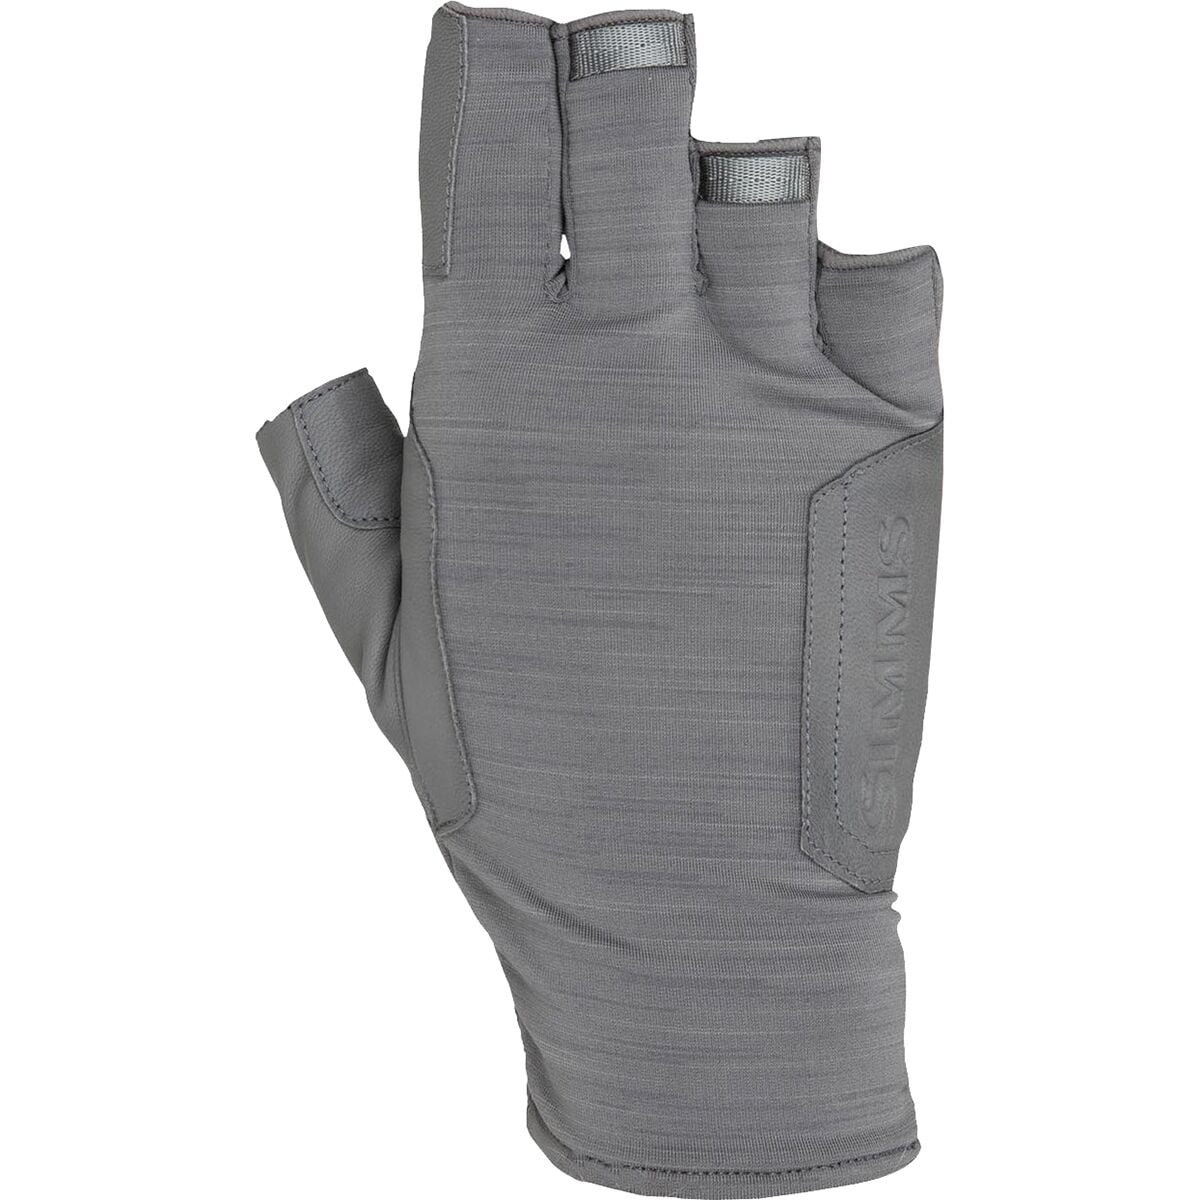 Simms SolarFlex Guide Glove - Men's